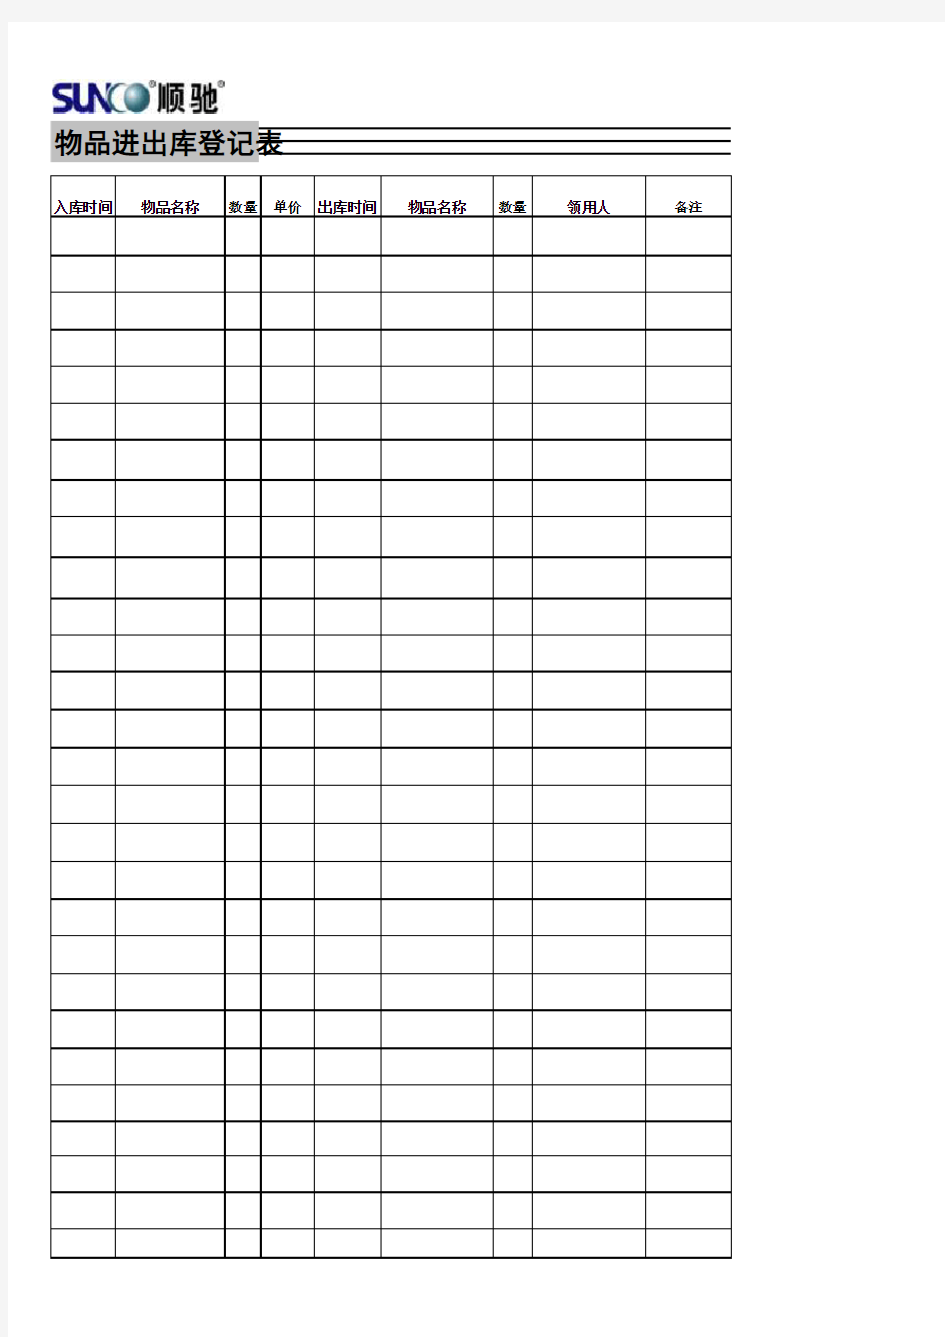 【Excel表格】固定资产领用登记表